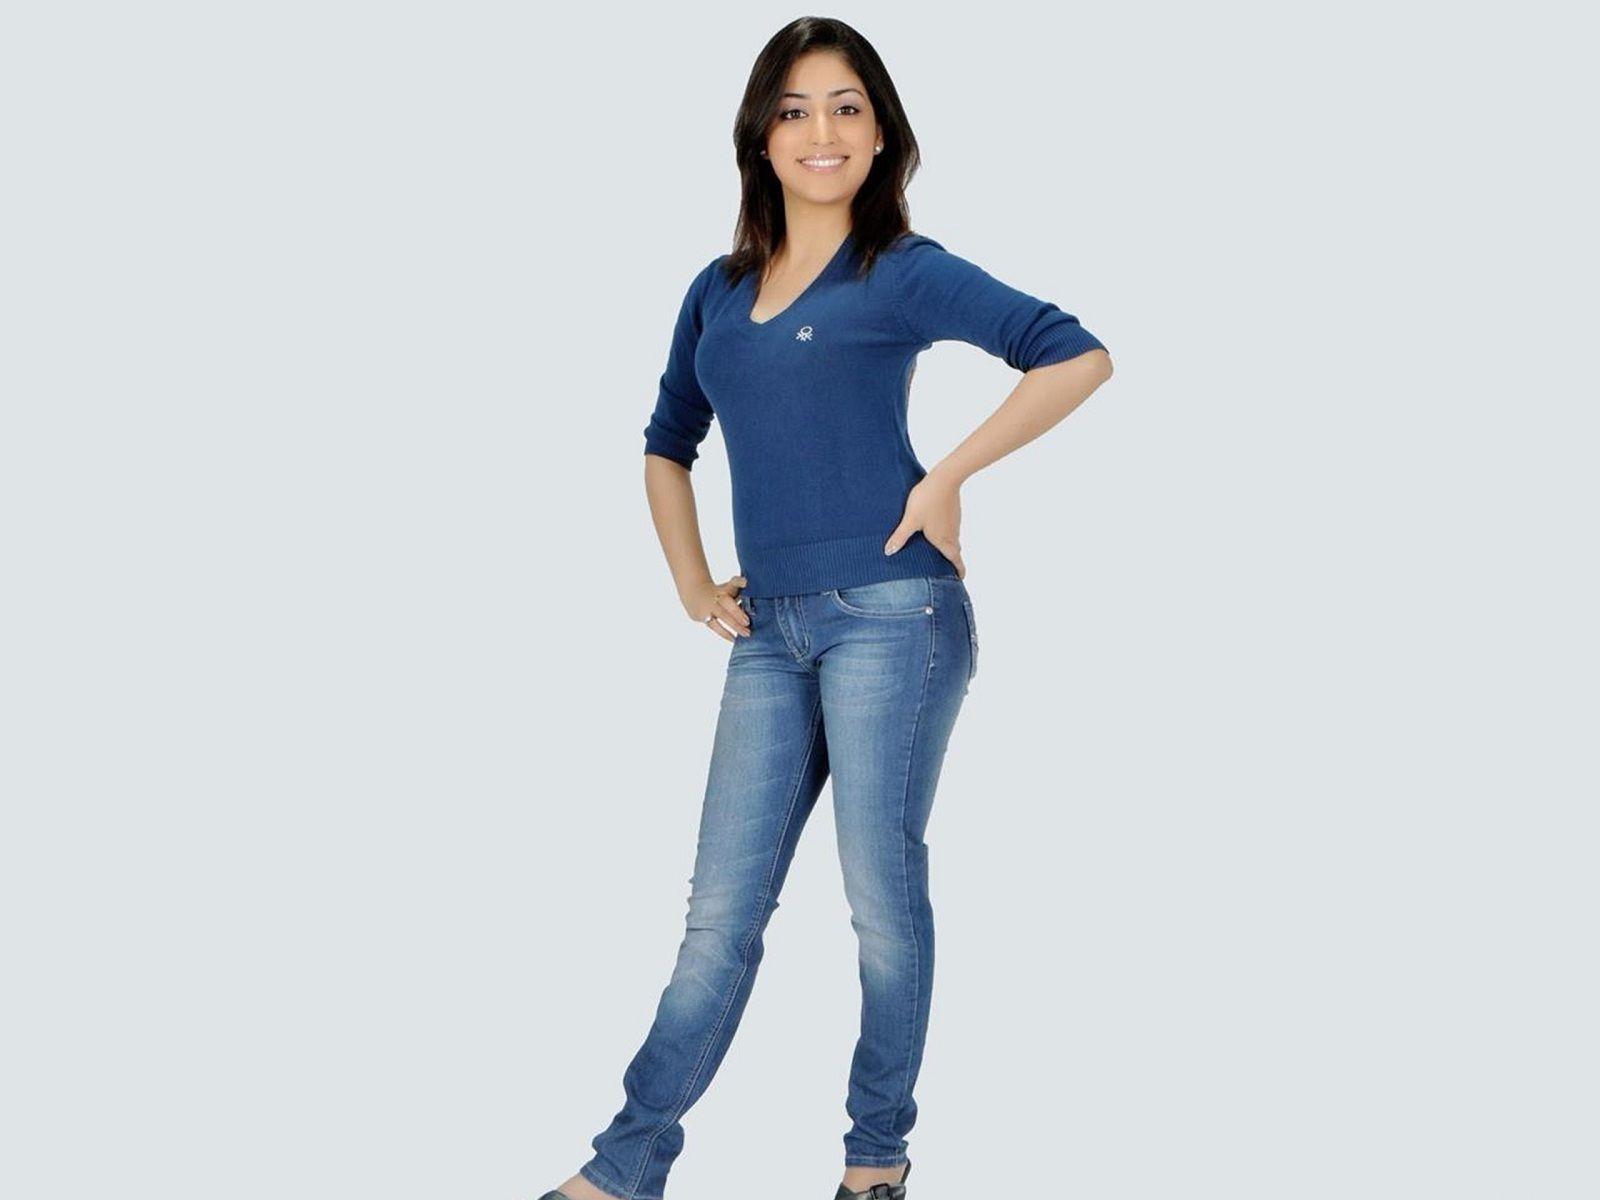 t shirts canada: Yami Gautam hot in jeans and t shirt. HD